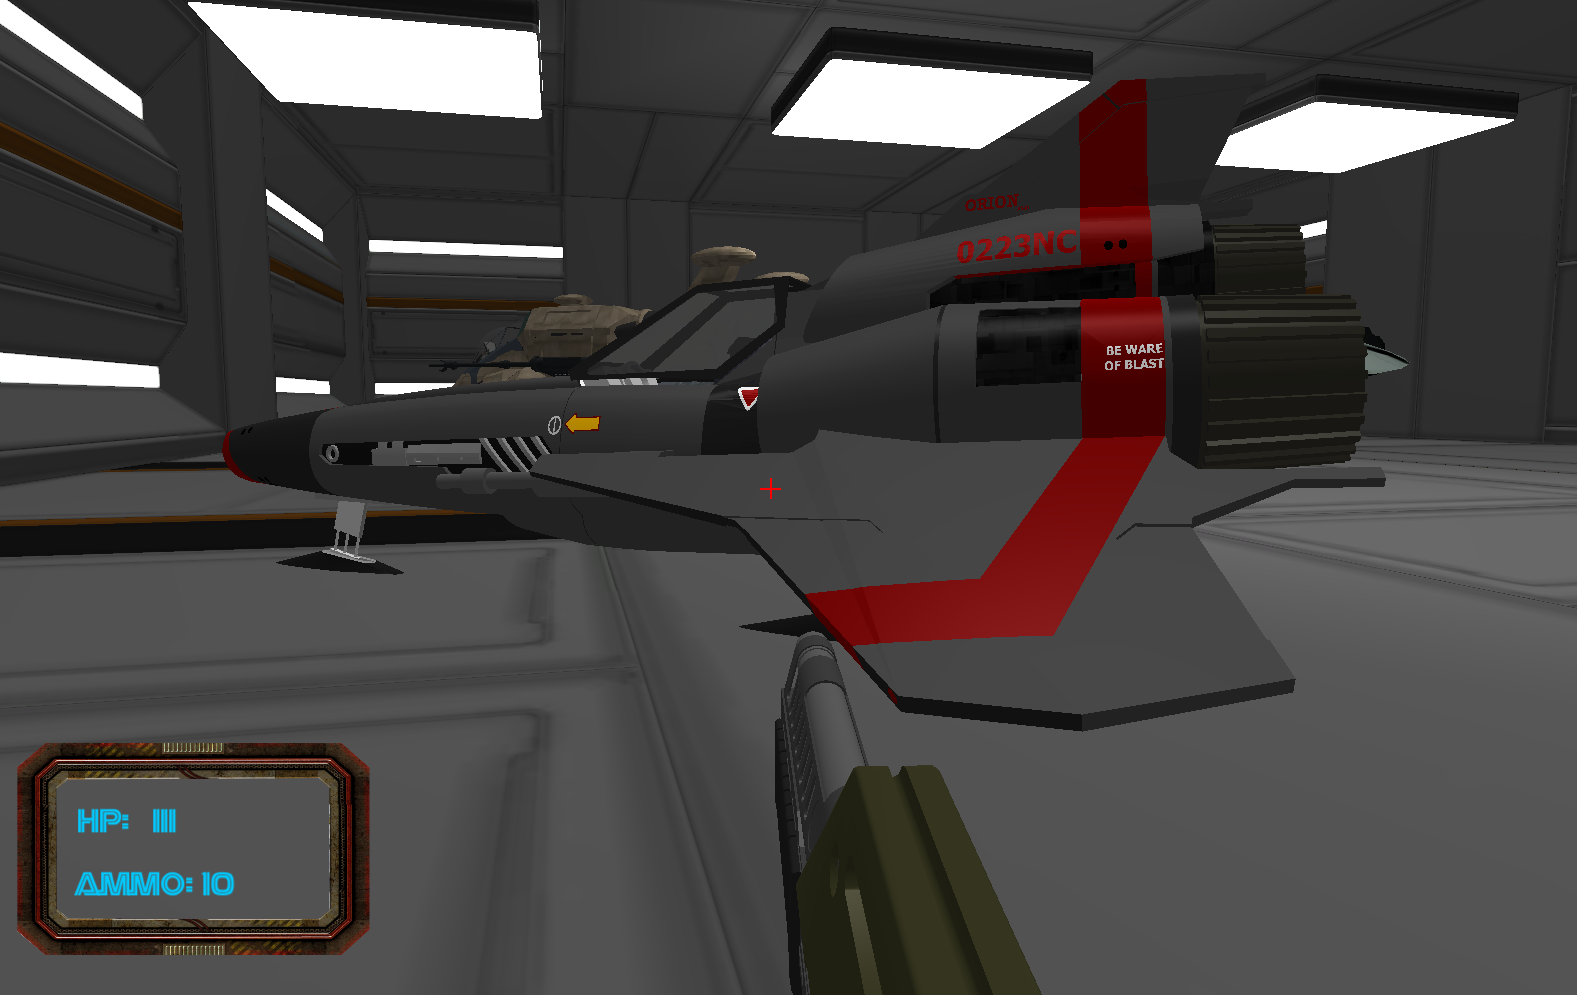 Image of Battlestar Galactica simulator